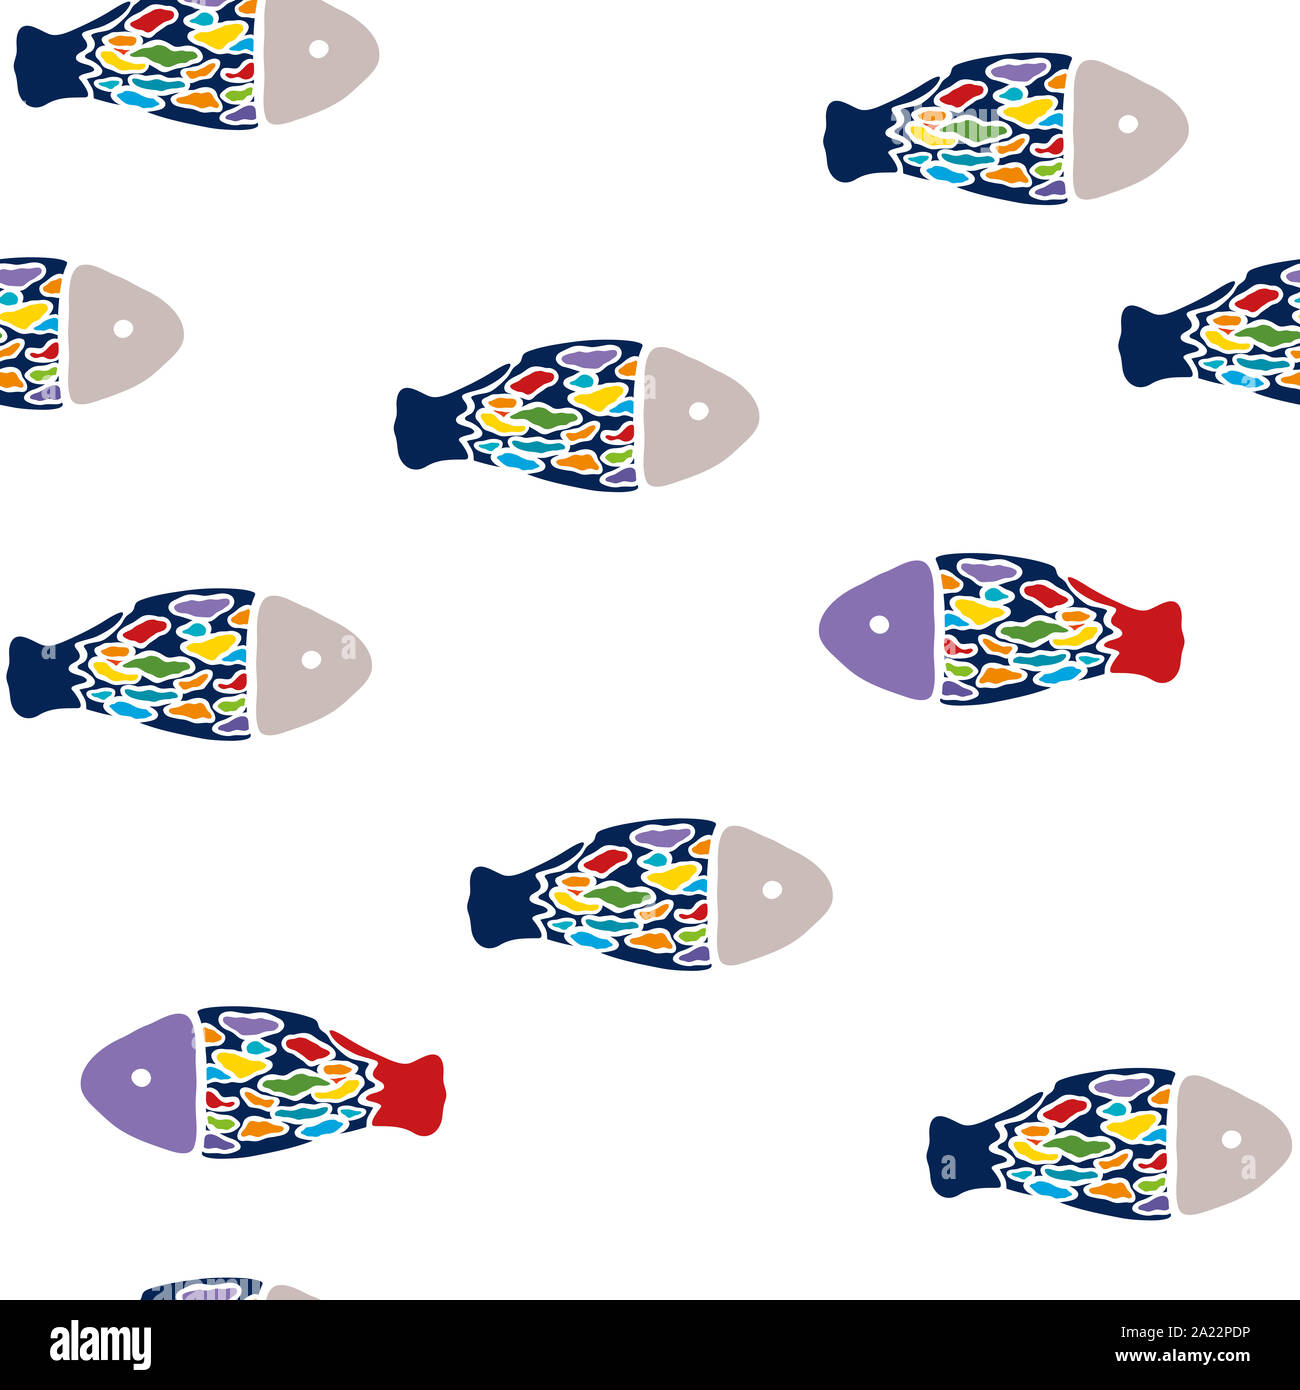 Seamless vector illustration, poissons, texture blanche, la vie marine Banque D'Images